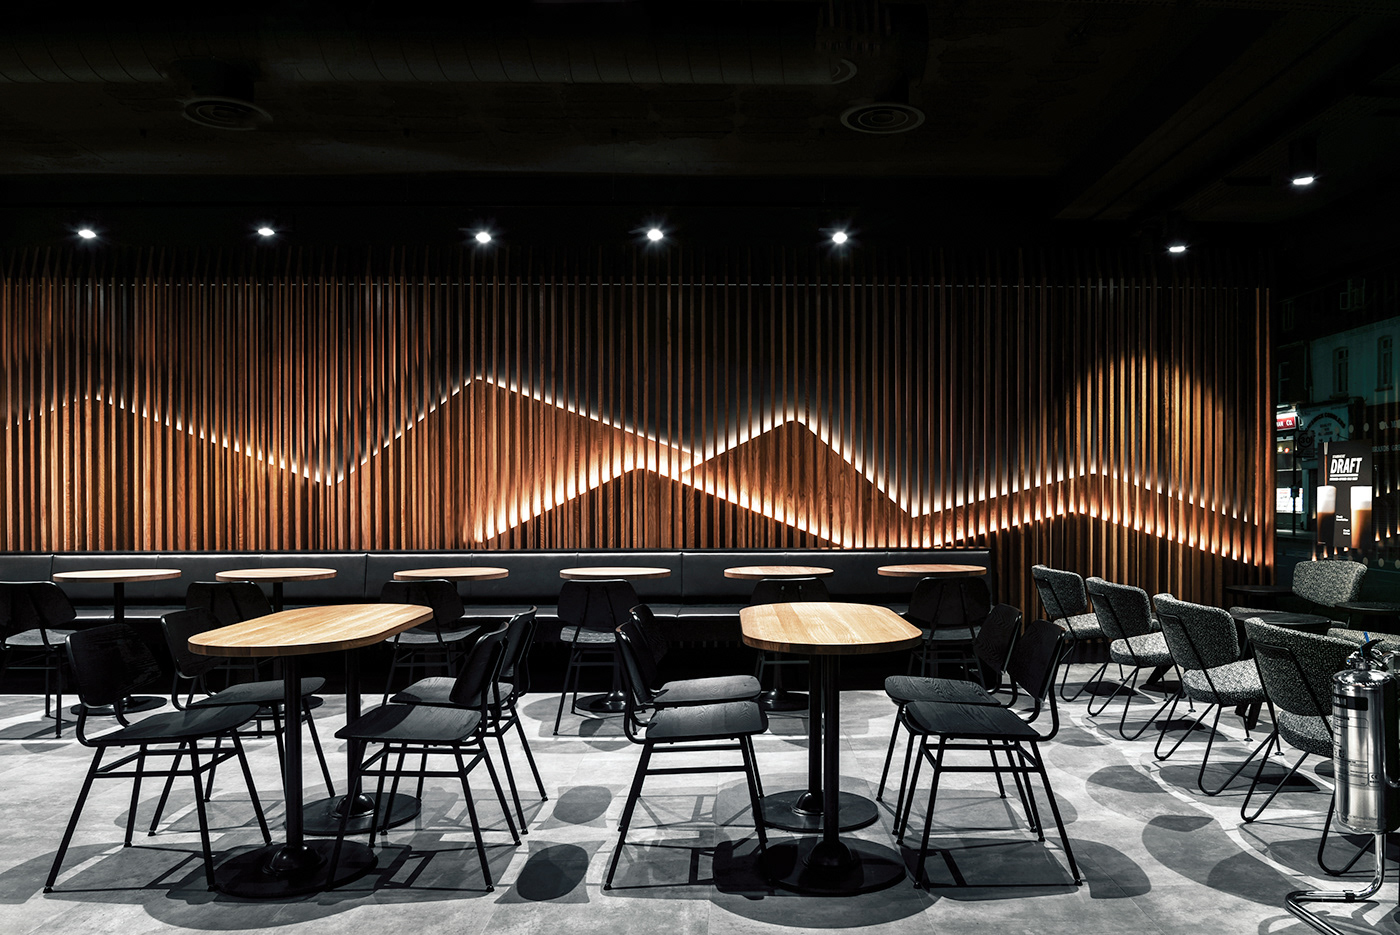 Interior design starbucks coffeeshop atmosphere cafe architecture InteriorPhotography Style interiordesign